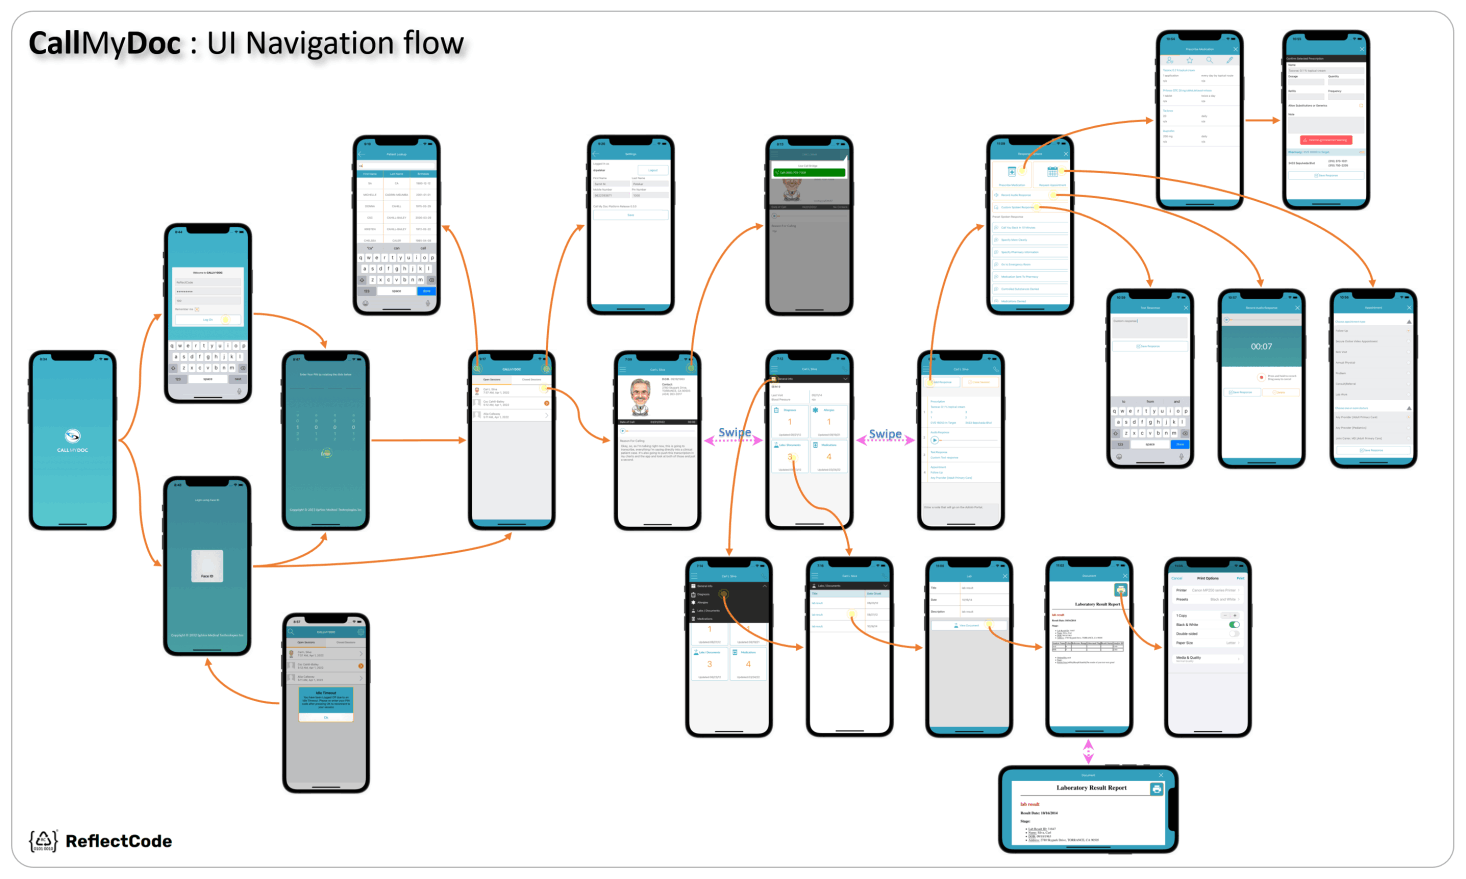 CallMyDoc UI Navigation Flow